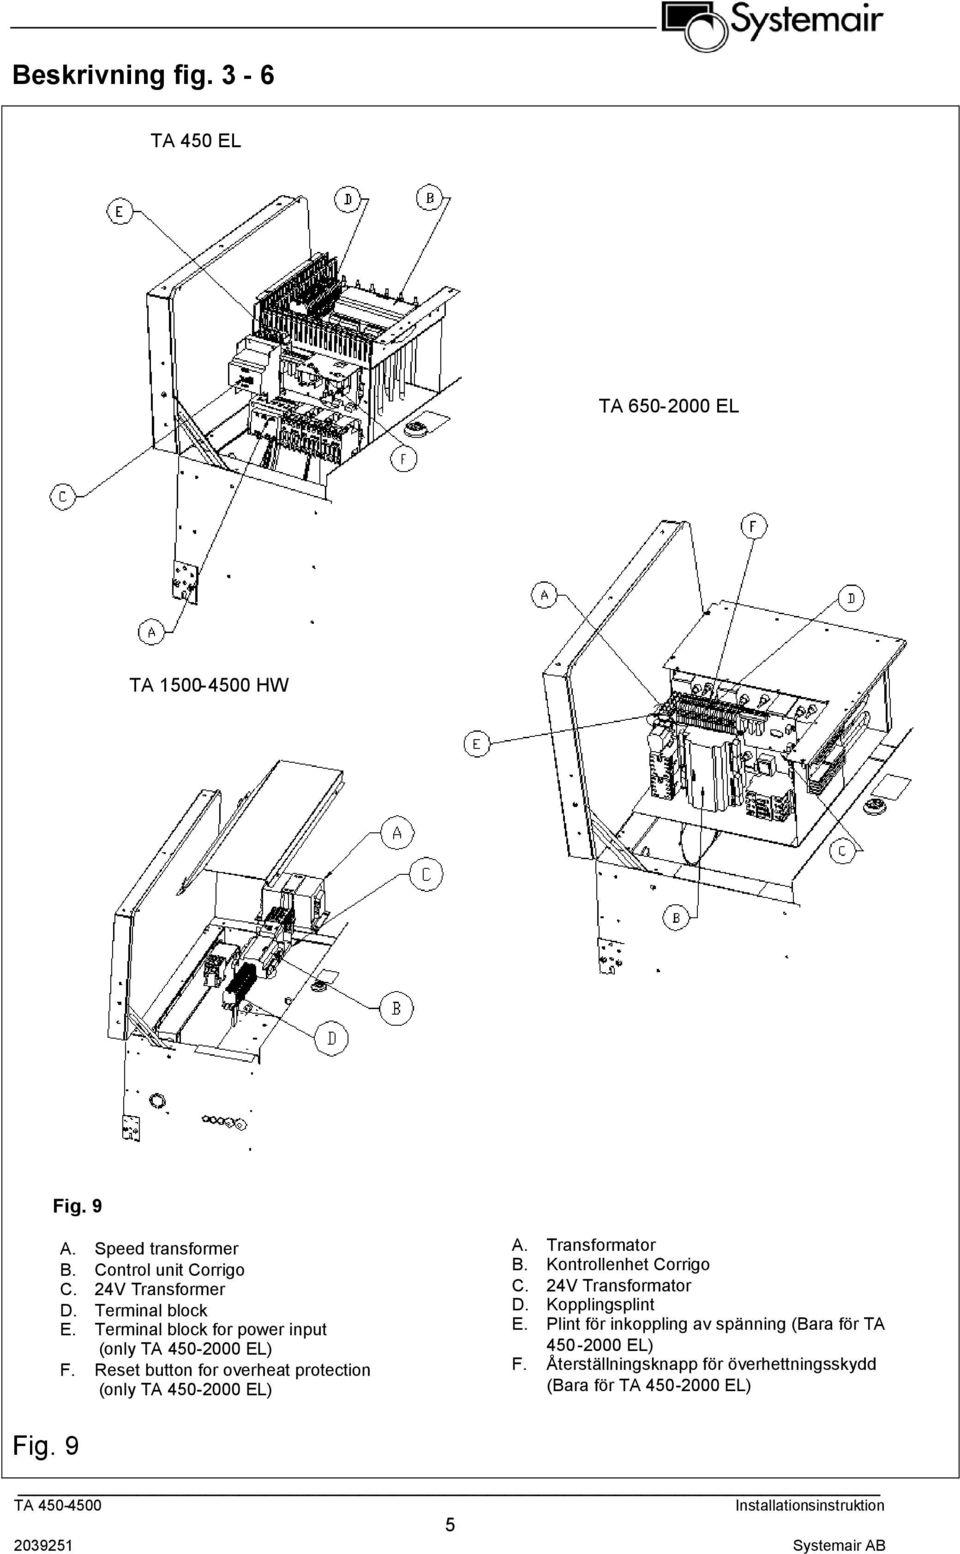 Reset button for overheat protection (only TA 450-2000 EL) A. Transformator B. Kontrollenhet Corrigo C. 24V Transformator D.